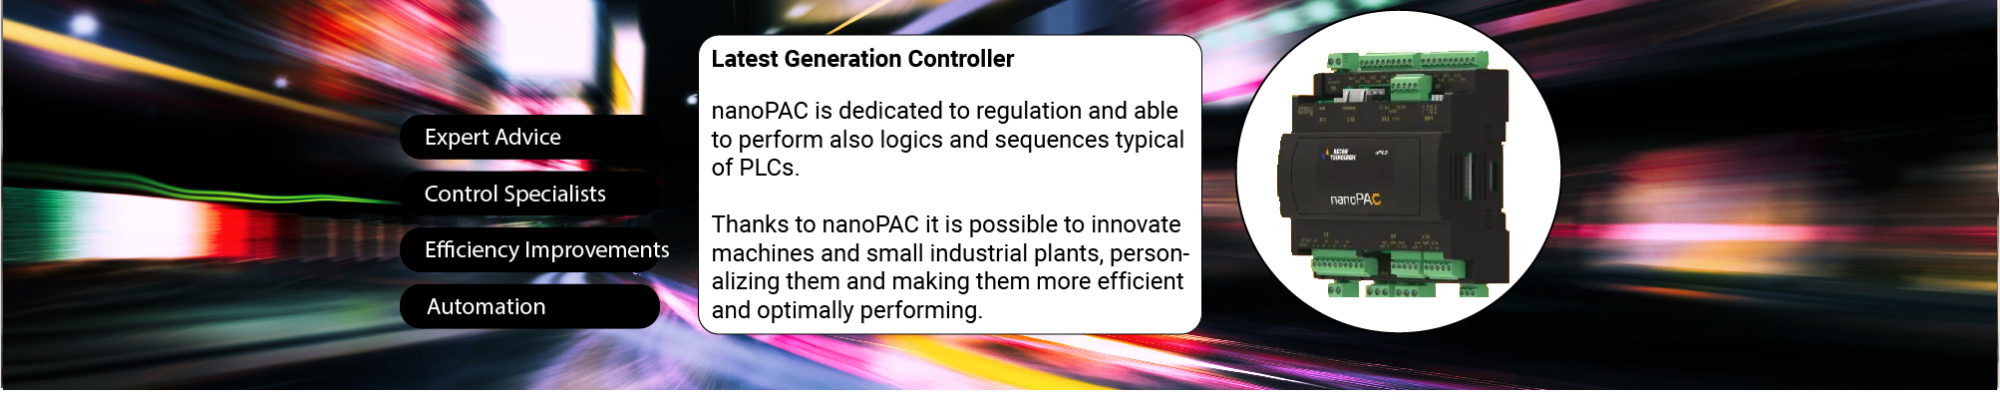 nanopac products